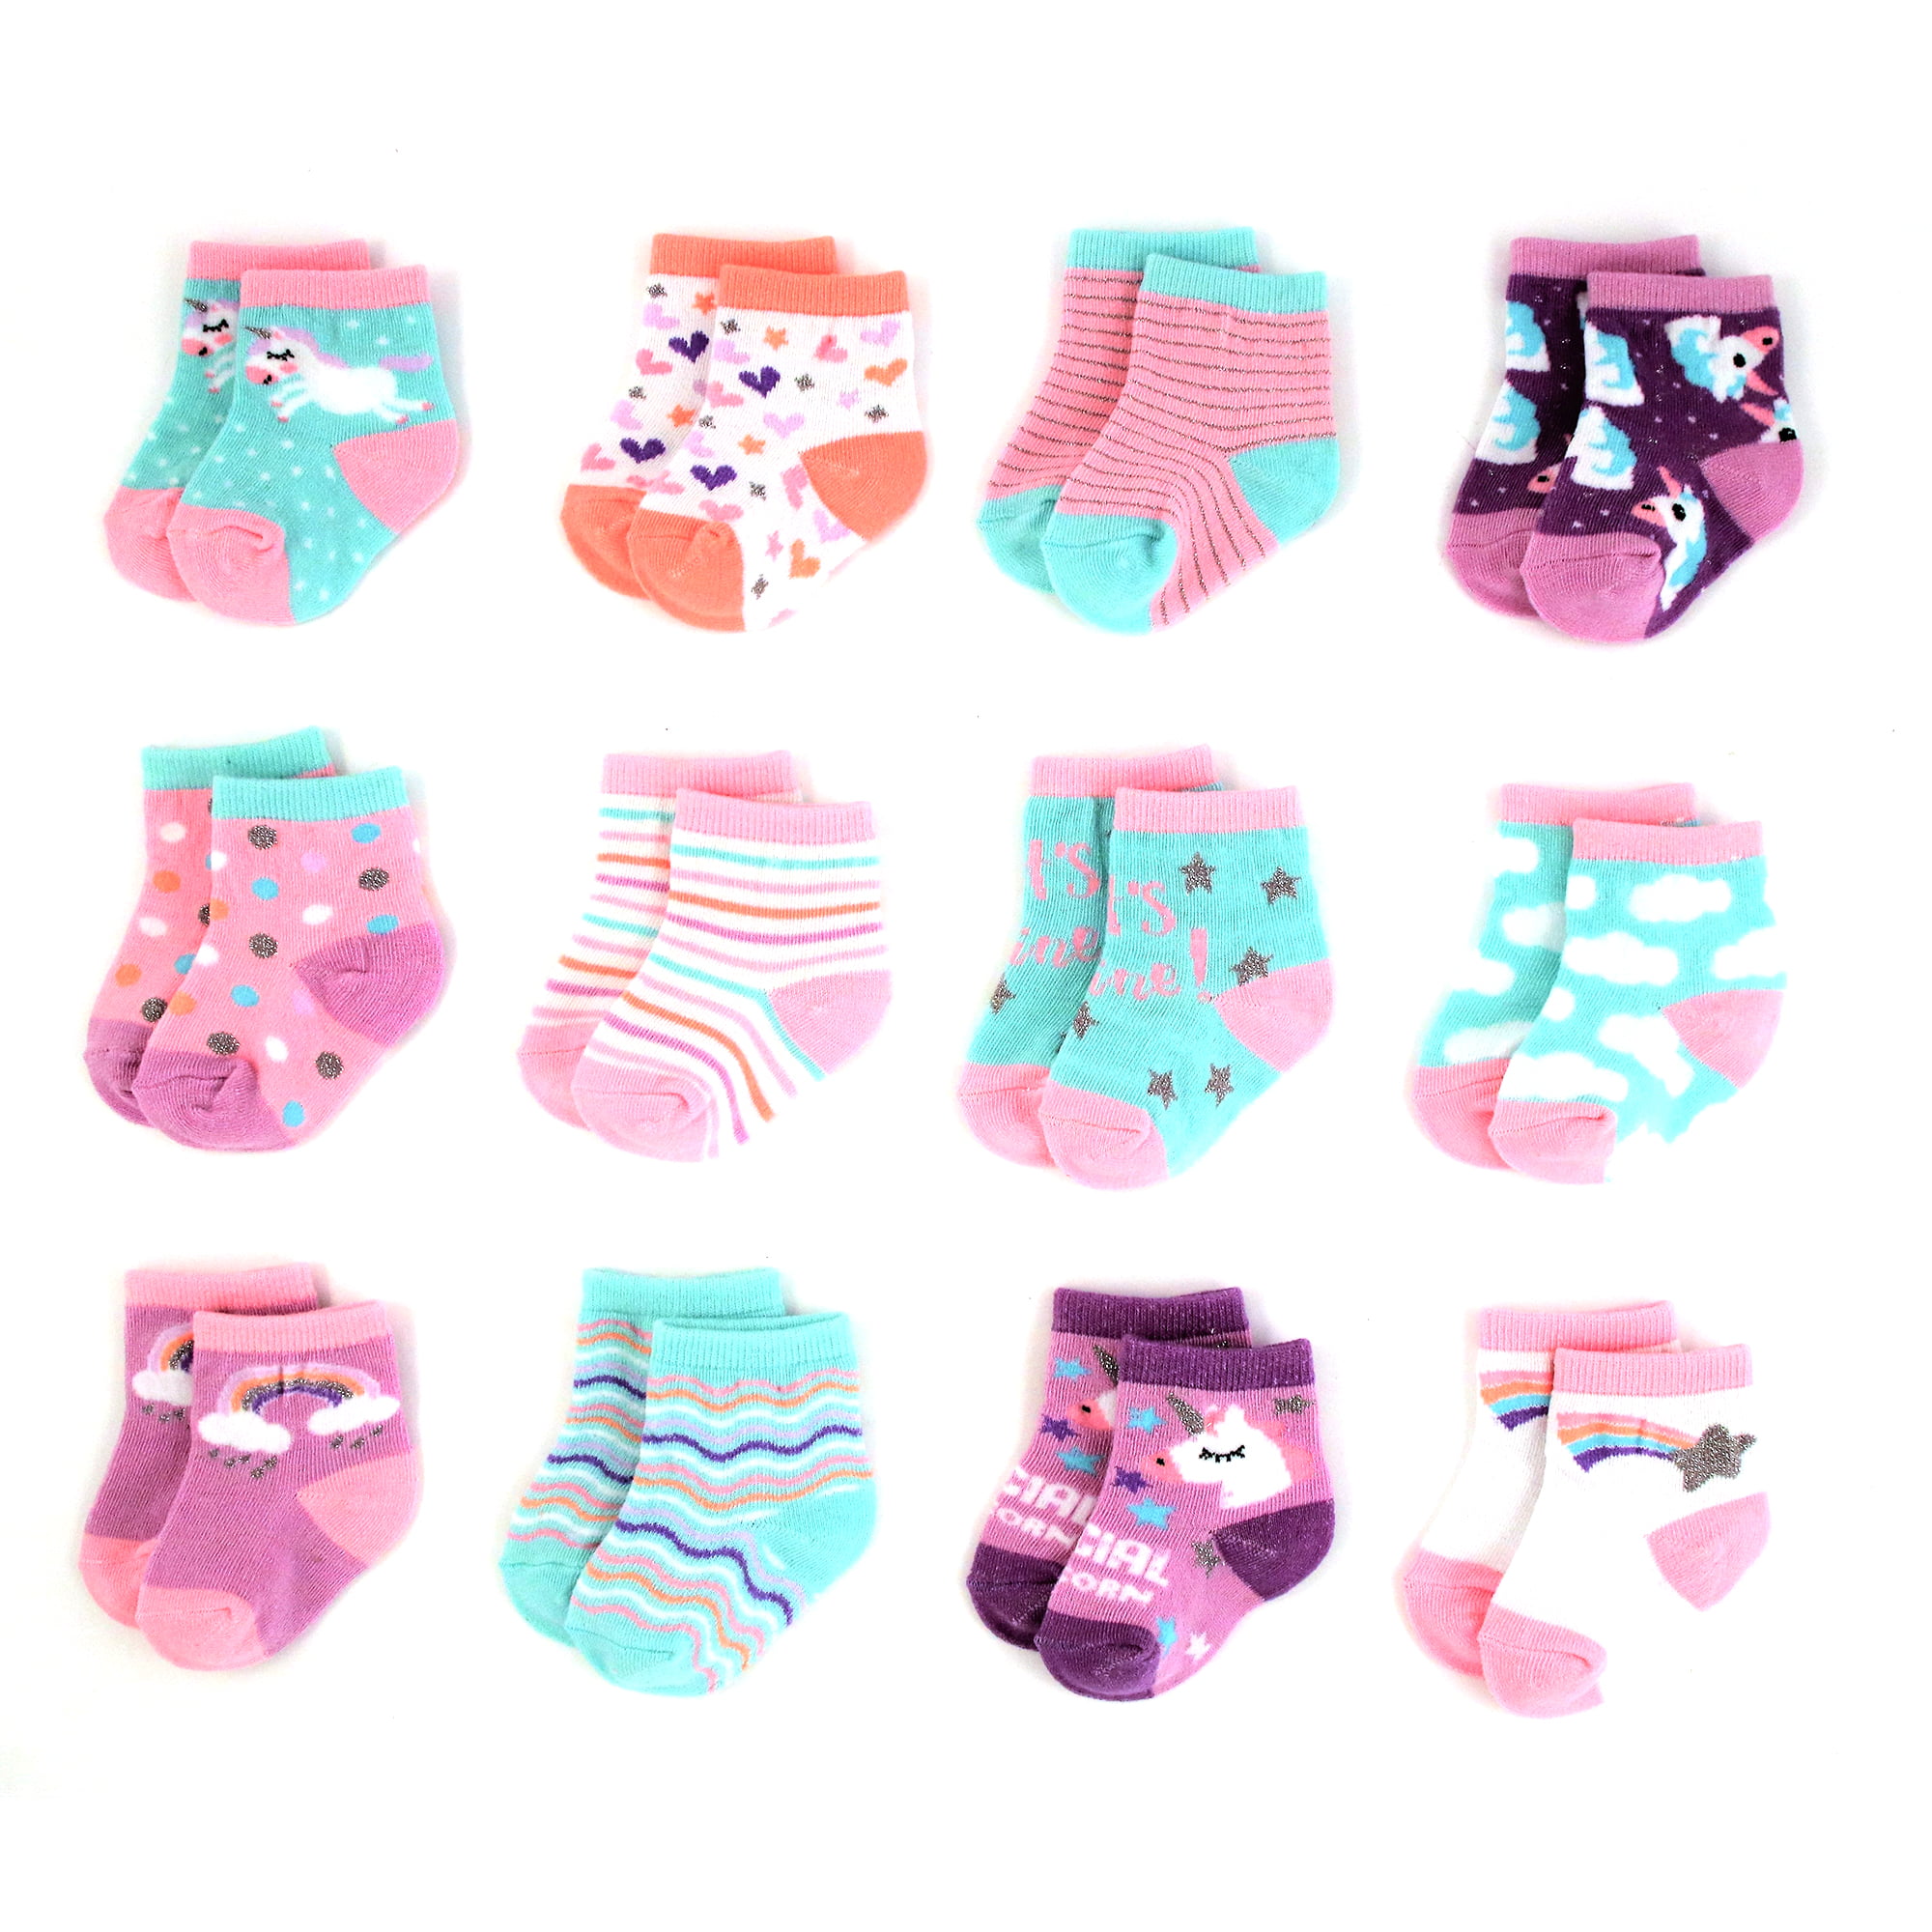 6 Pairs Baby Girls Infant Flowers Socks Premium Dress Socks for 0-3 Years Old 